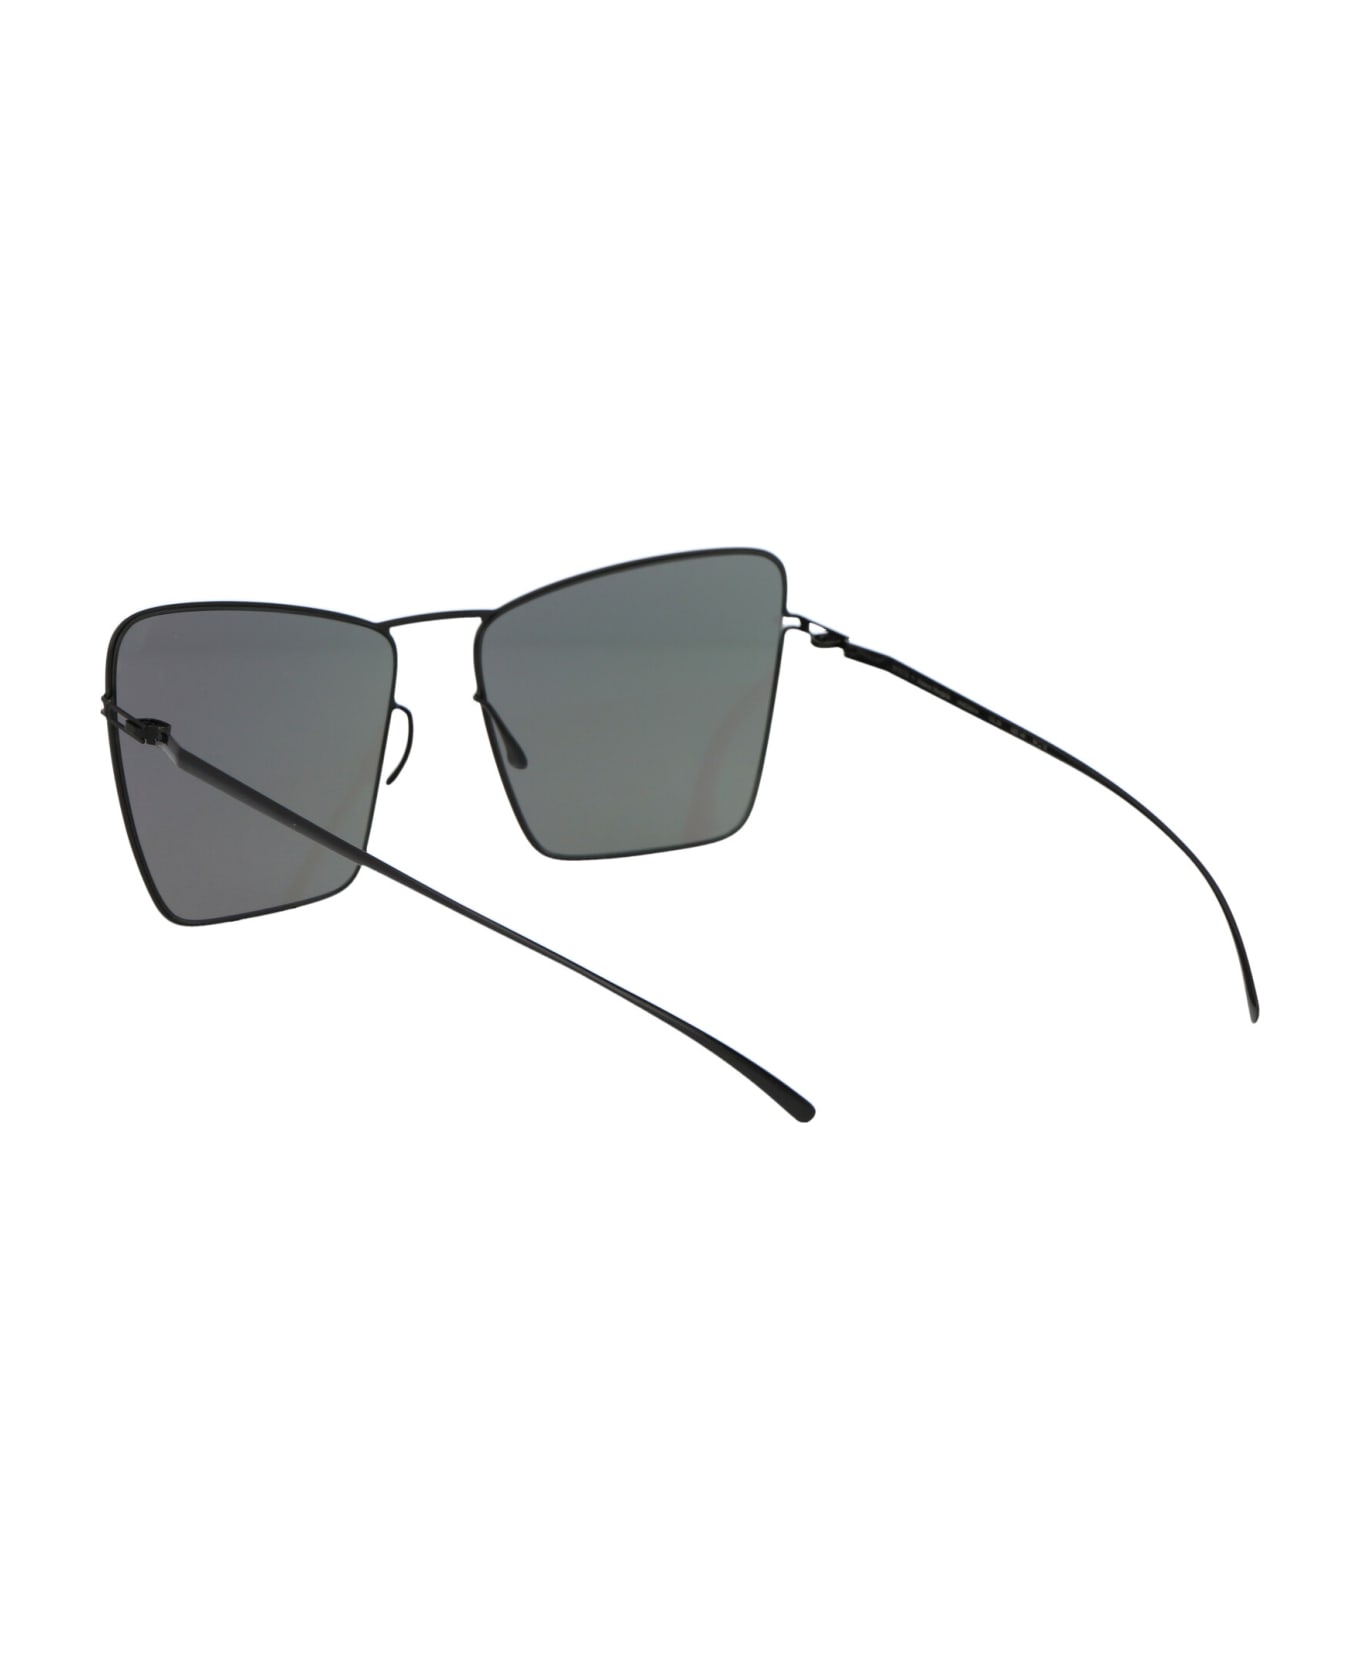 Mykita Mmesse014 Sunglasses - 190 E4 Black Grey Solid